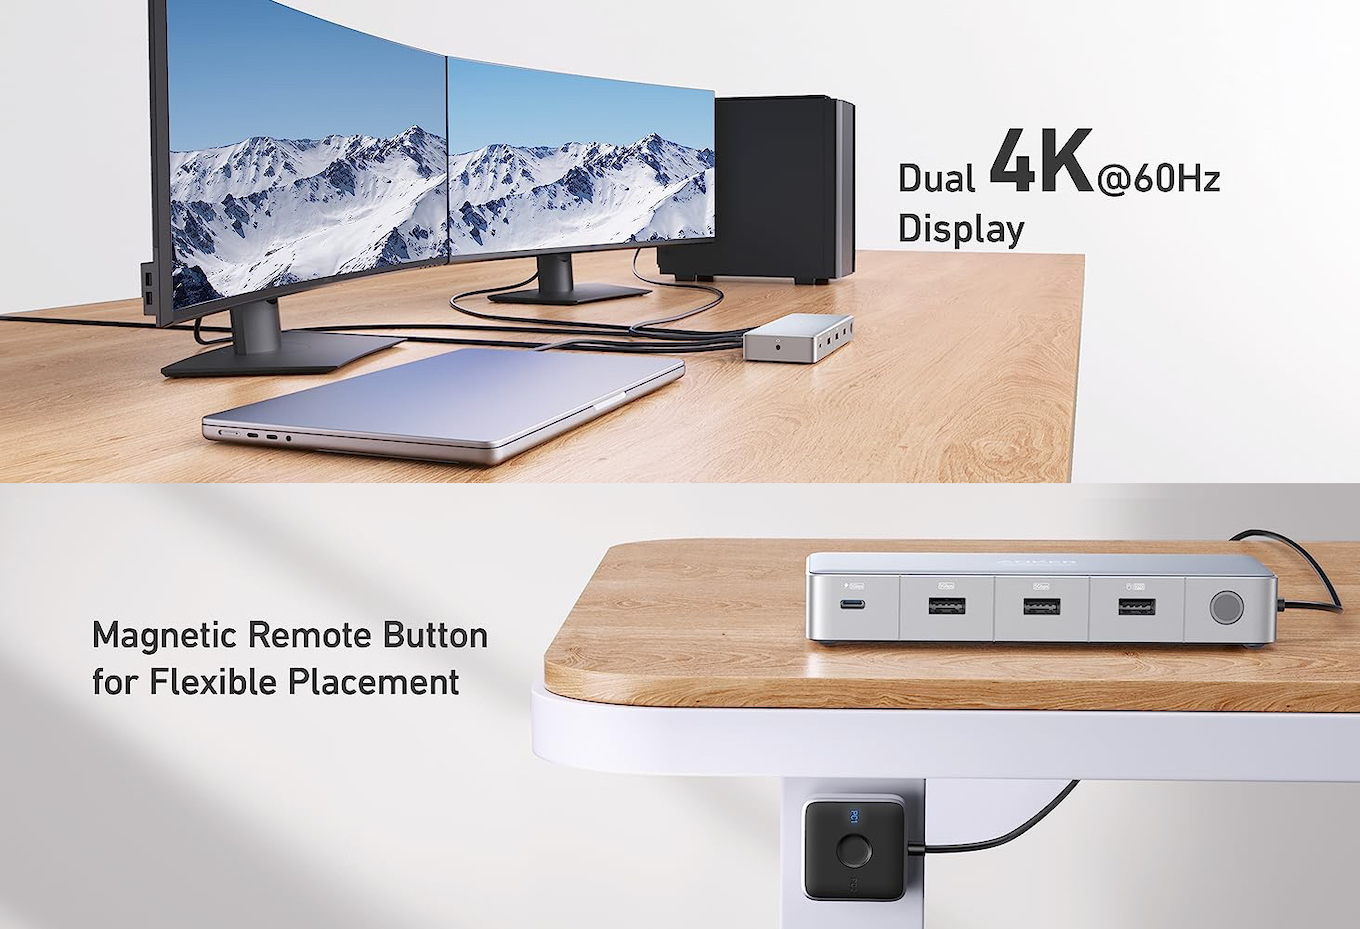 Anker 553 USB-C Docking Station (KVM Switch)